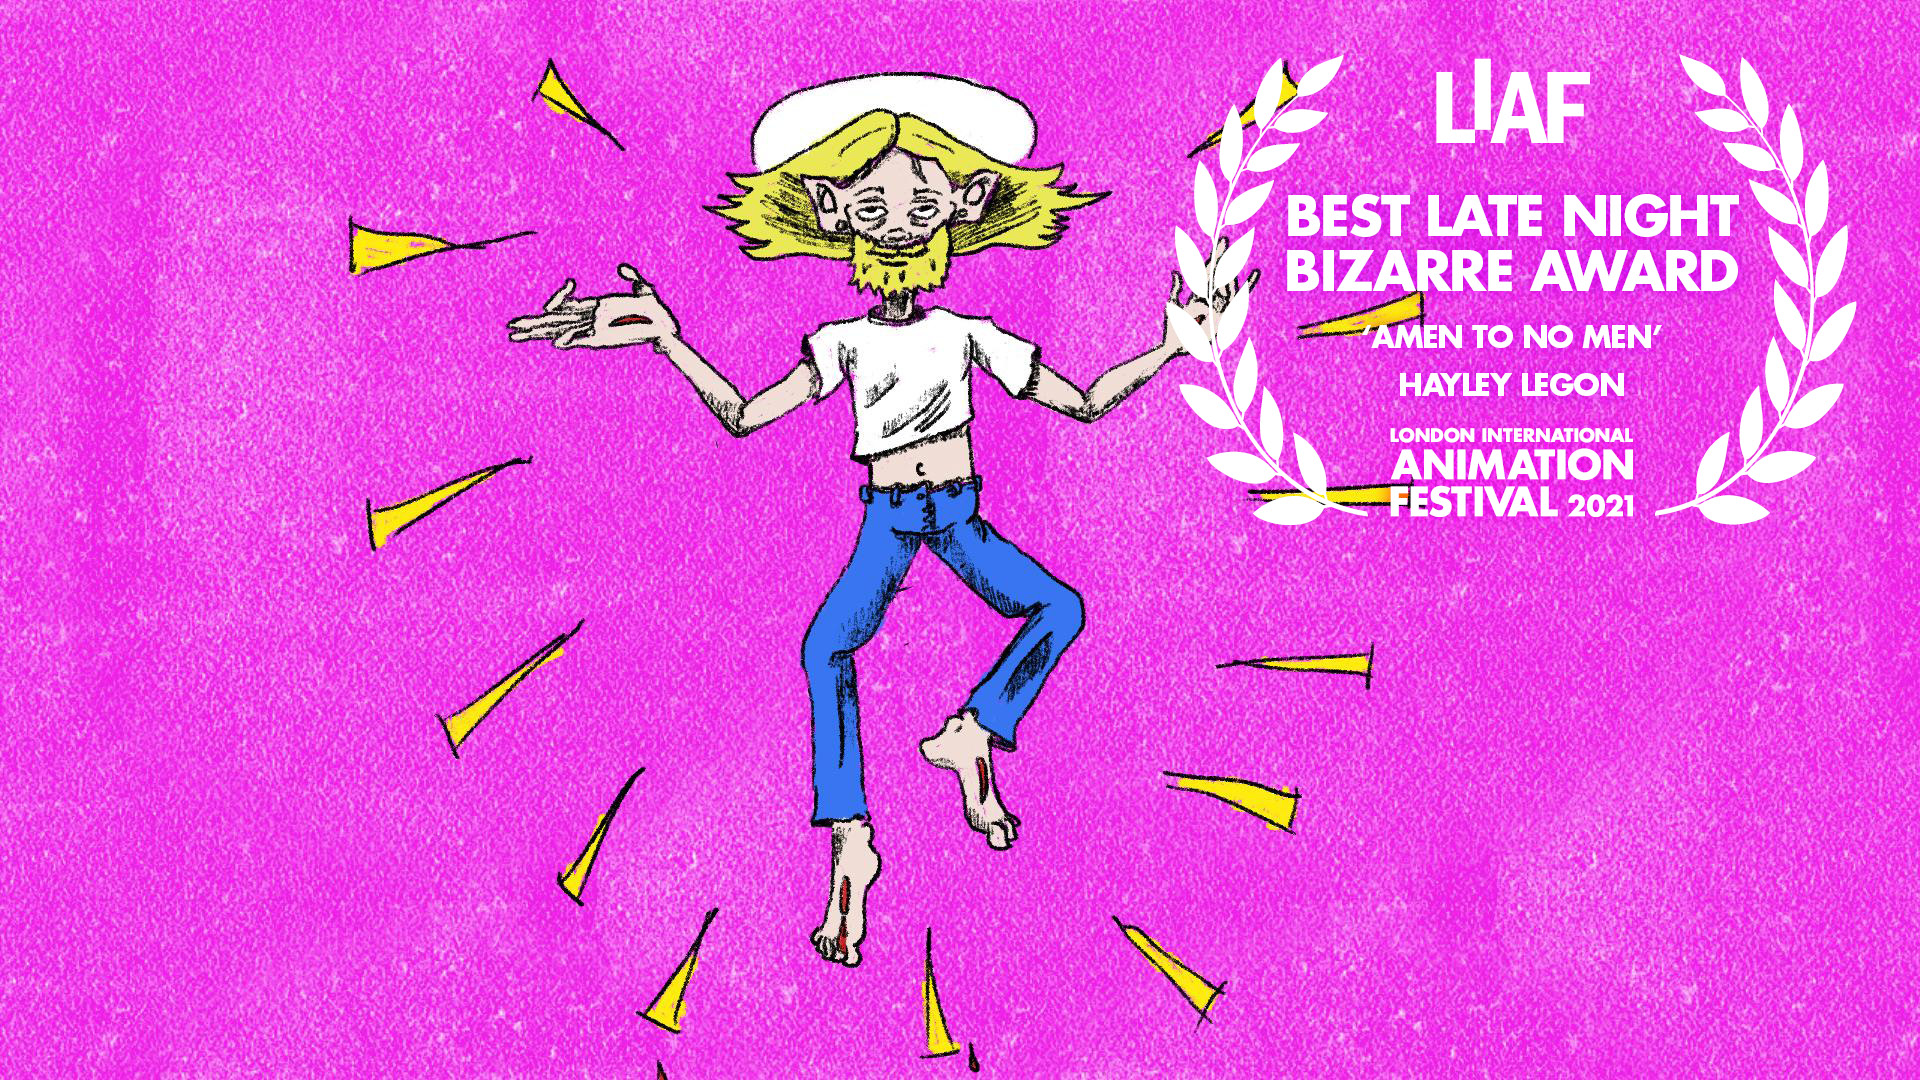 Best Late Night Bizarre Award, Amen to No Men, Hayley Legon, LIAF, London International Animation Festival